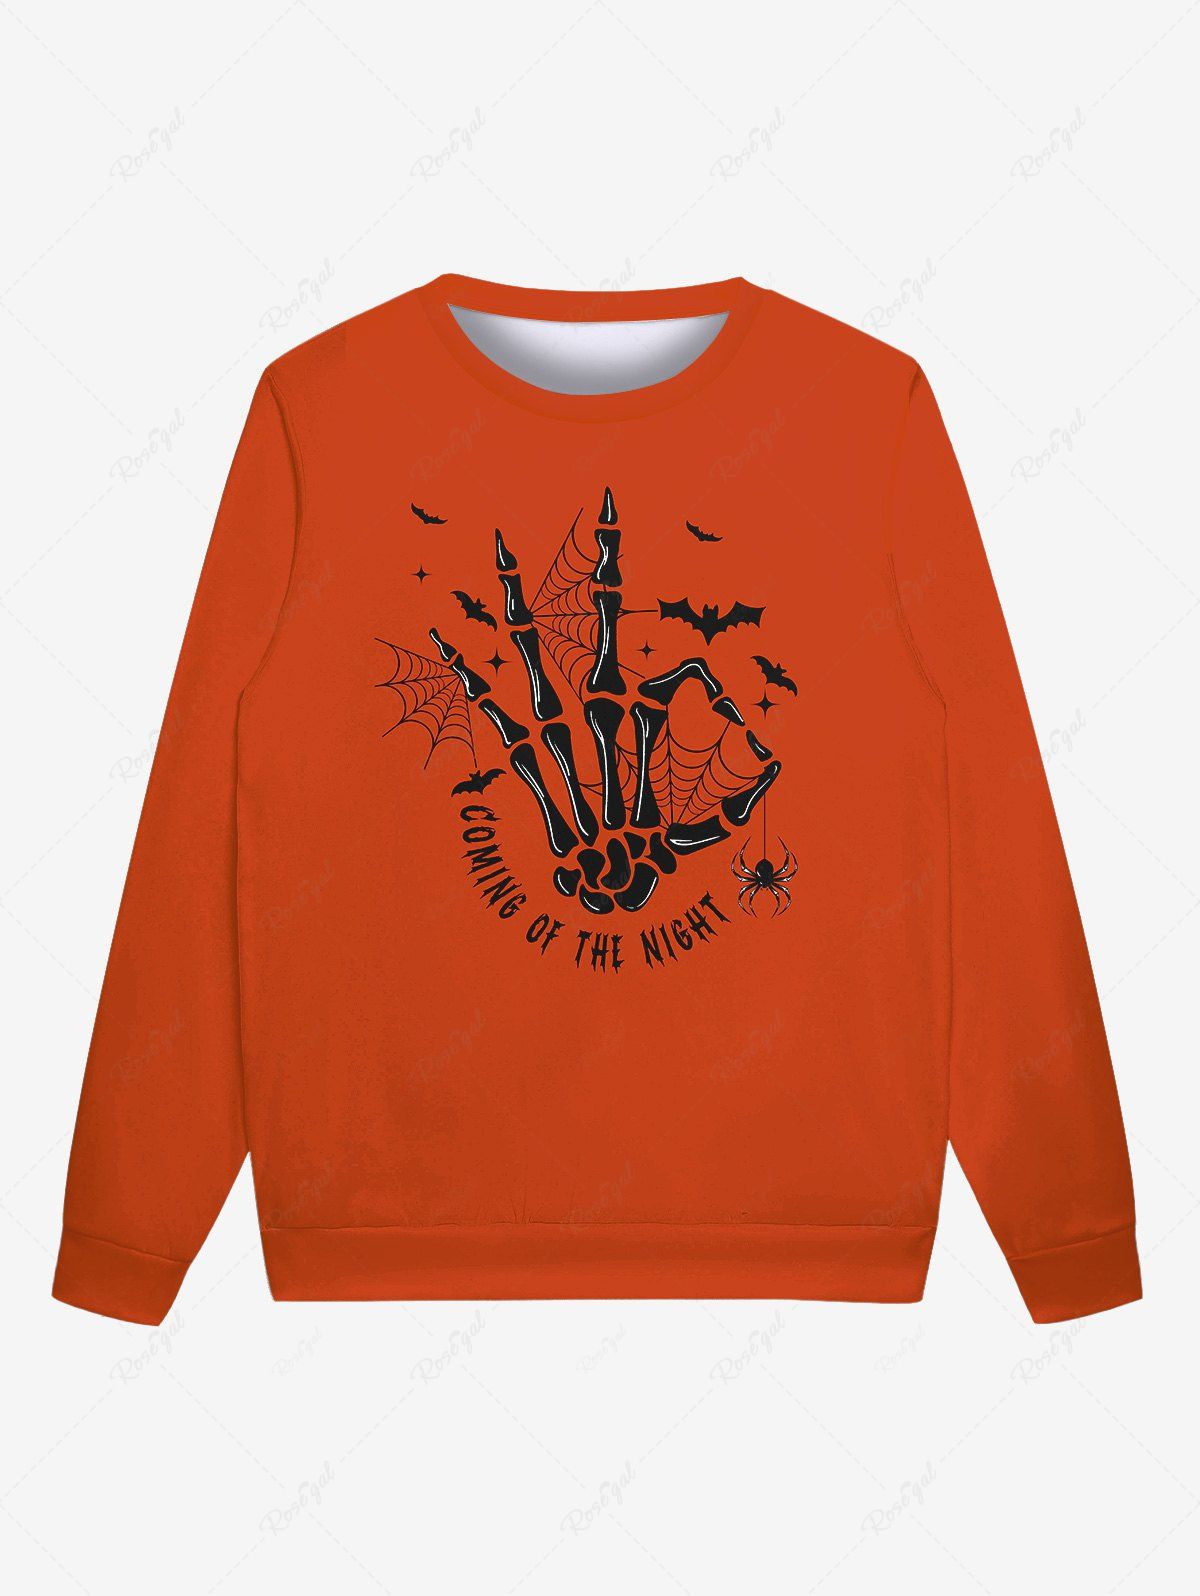 Gothic Skeleton Spider Web Bat Letters Print Halloween Sweatshirt For Men Rouge 4XL